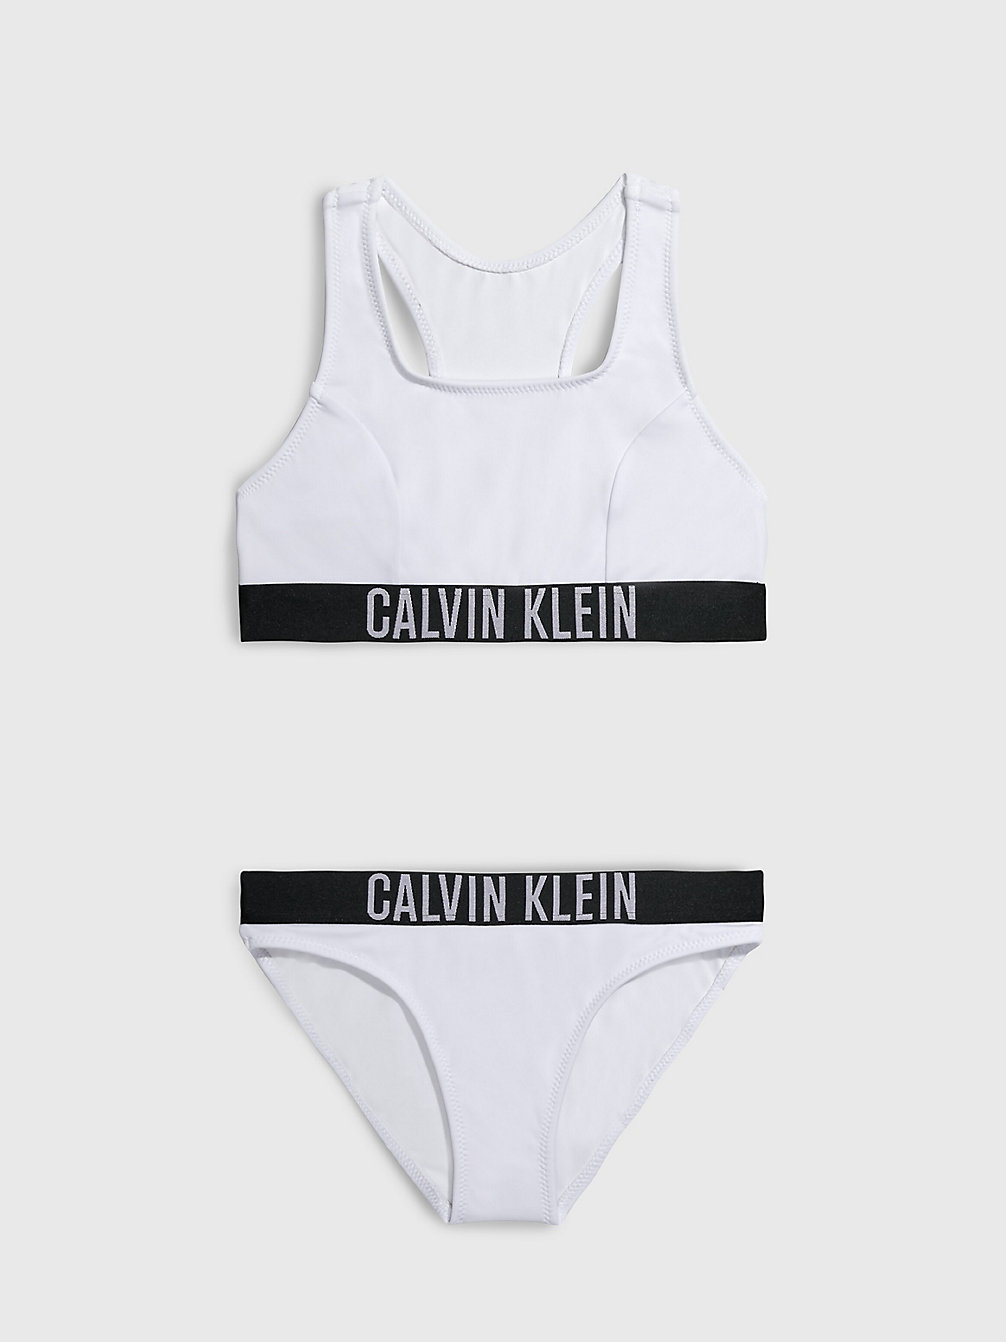 PVH CLASSIC WHITE > Meisjesbralette Bikini - Intense Power > undefined girls - Calvin Klein